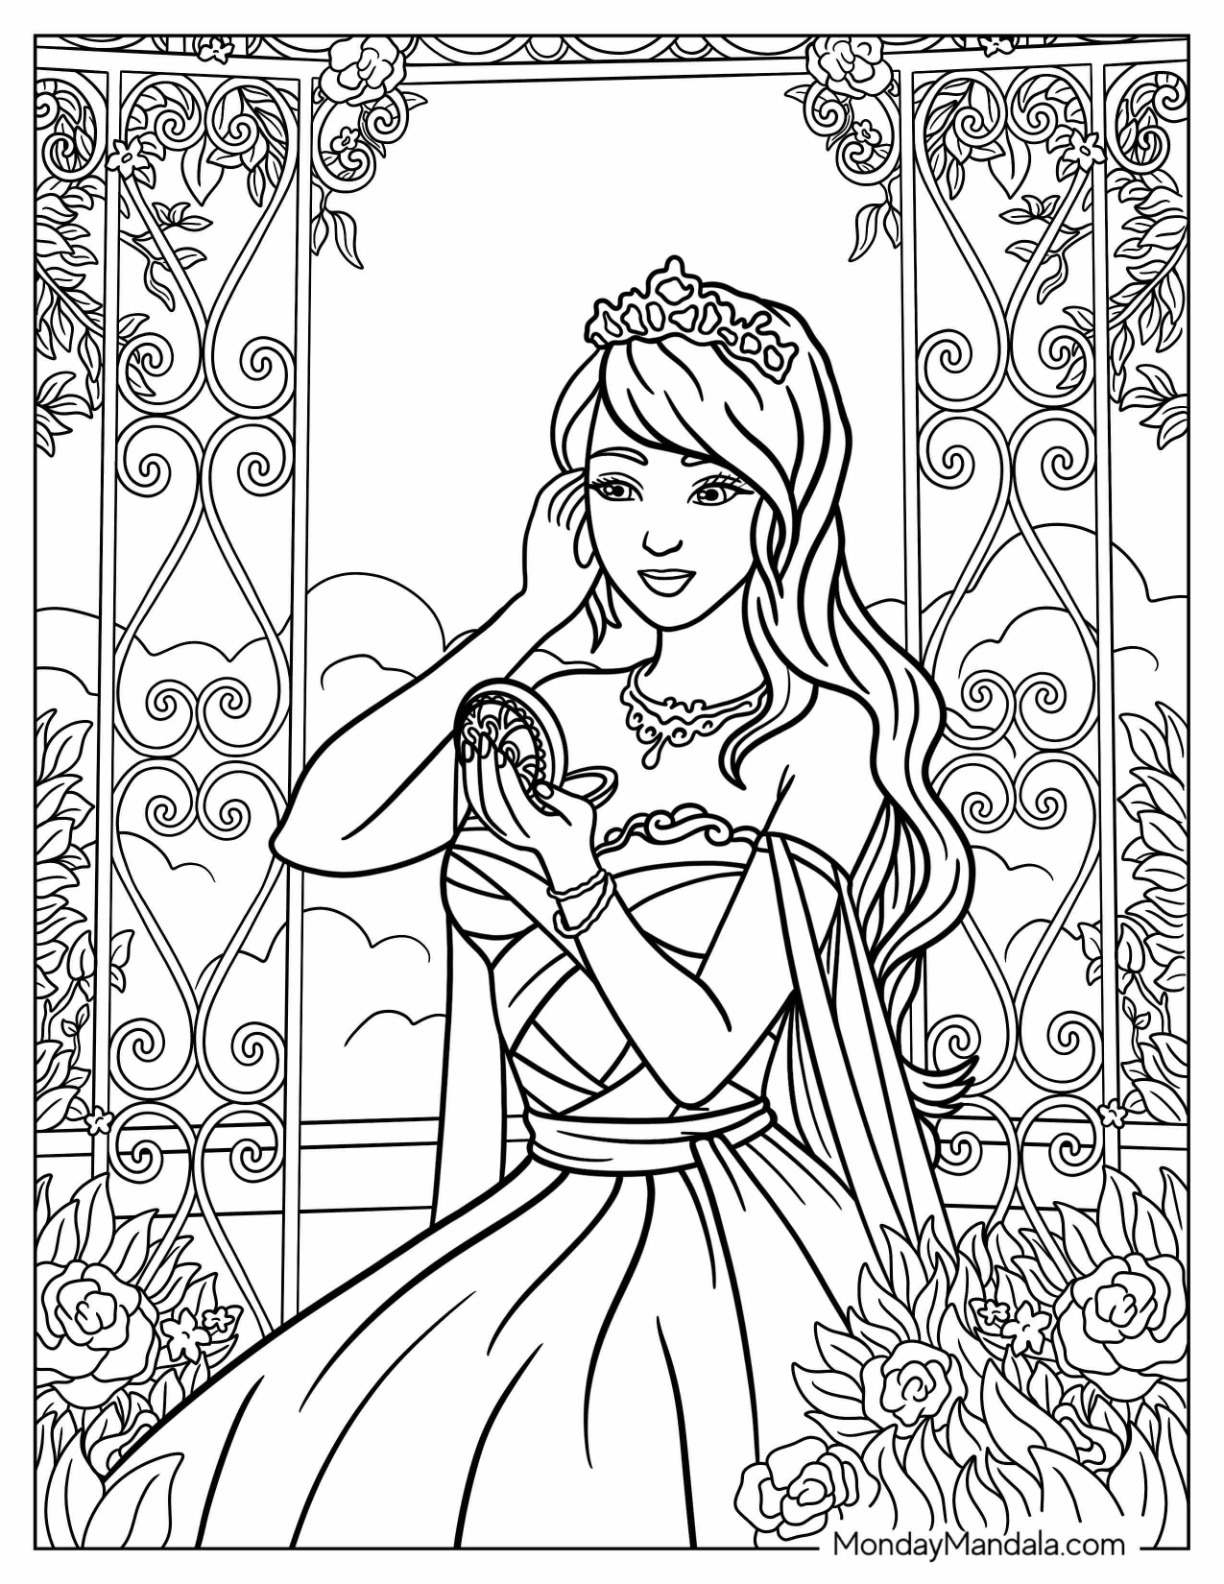 Princess coloring pages free pdf printables